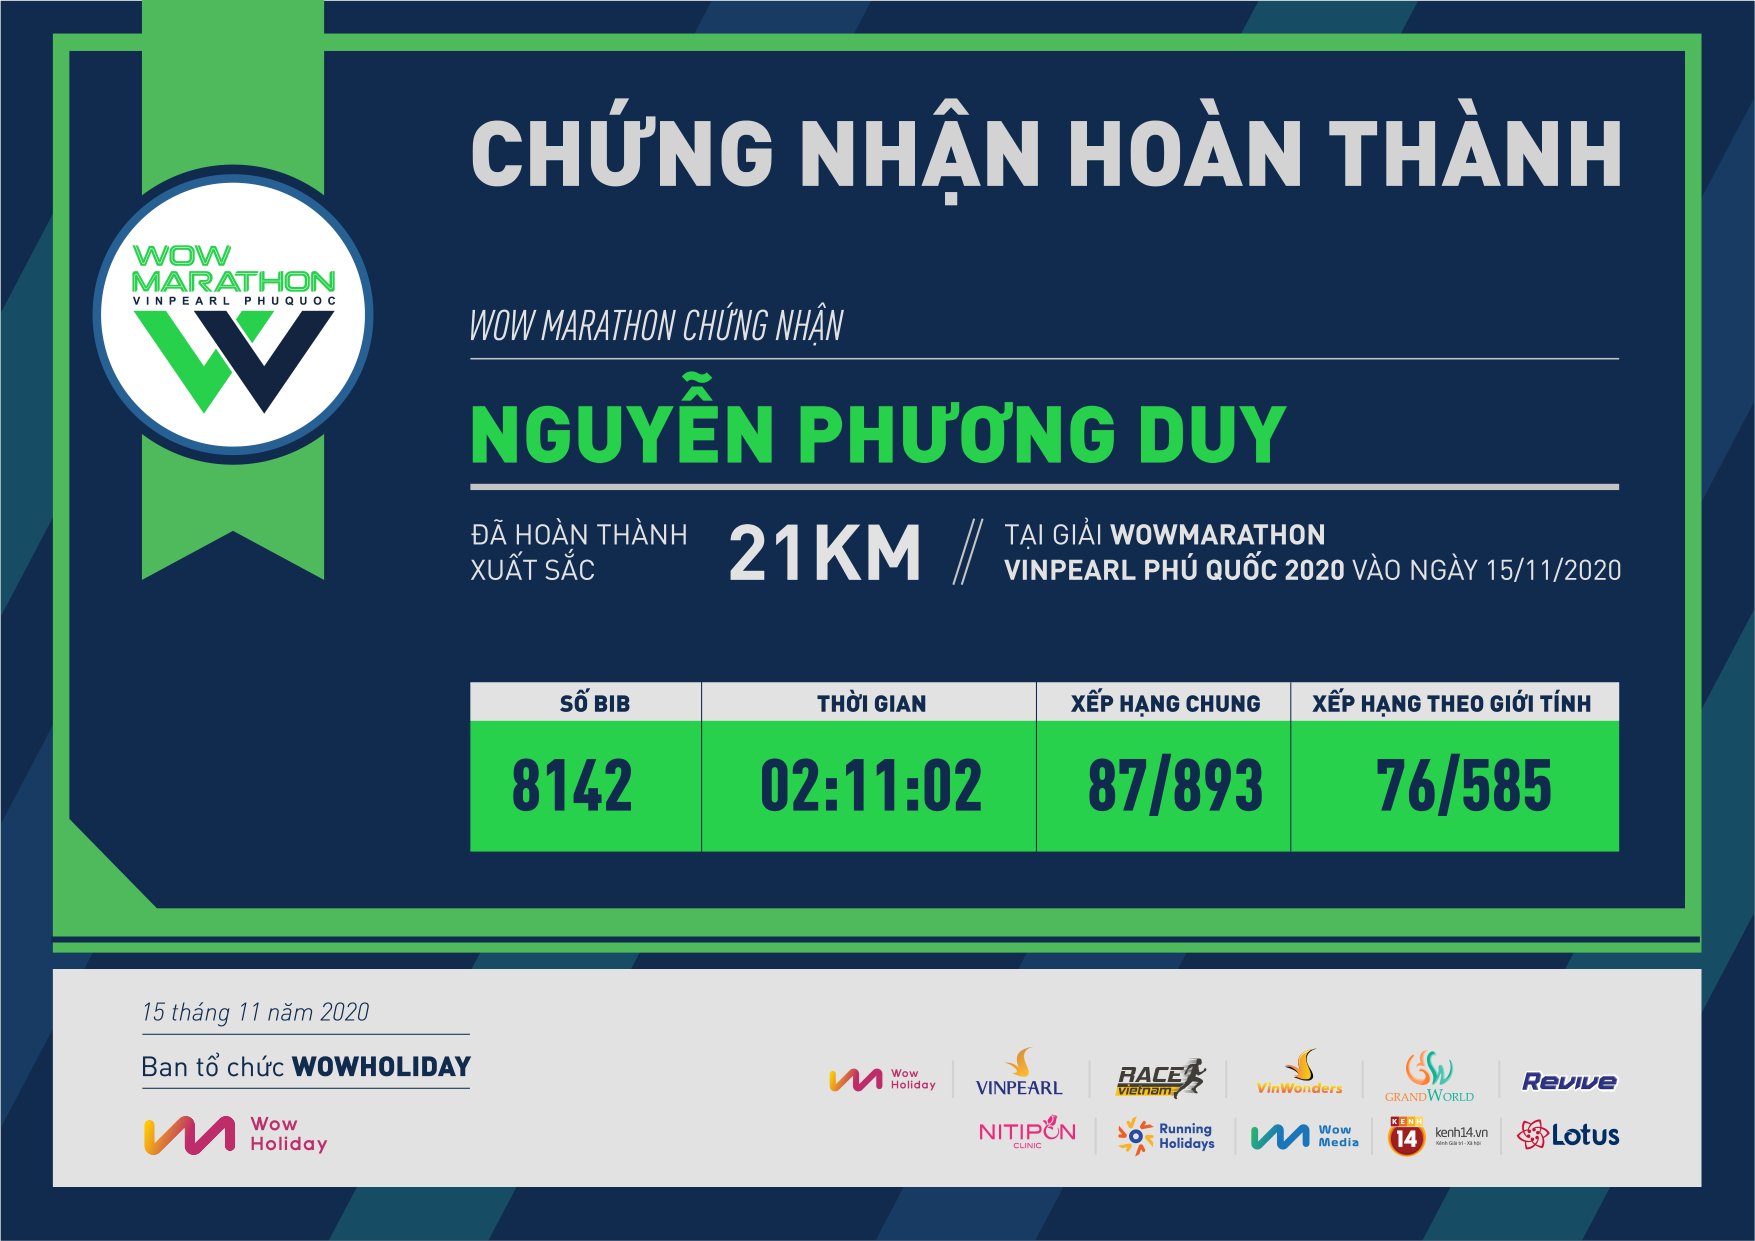 8142 - Nguyễn Phương Duy